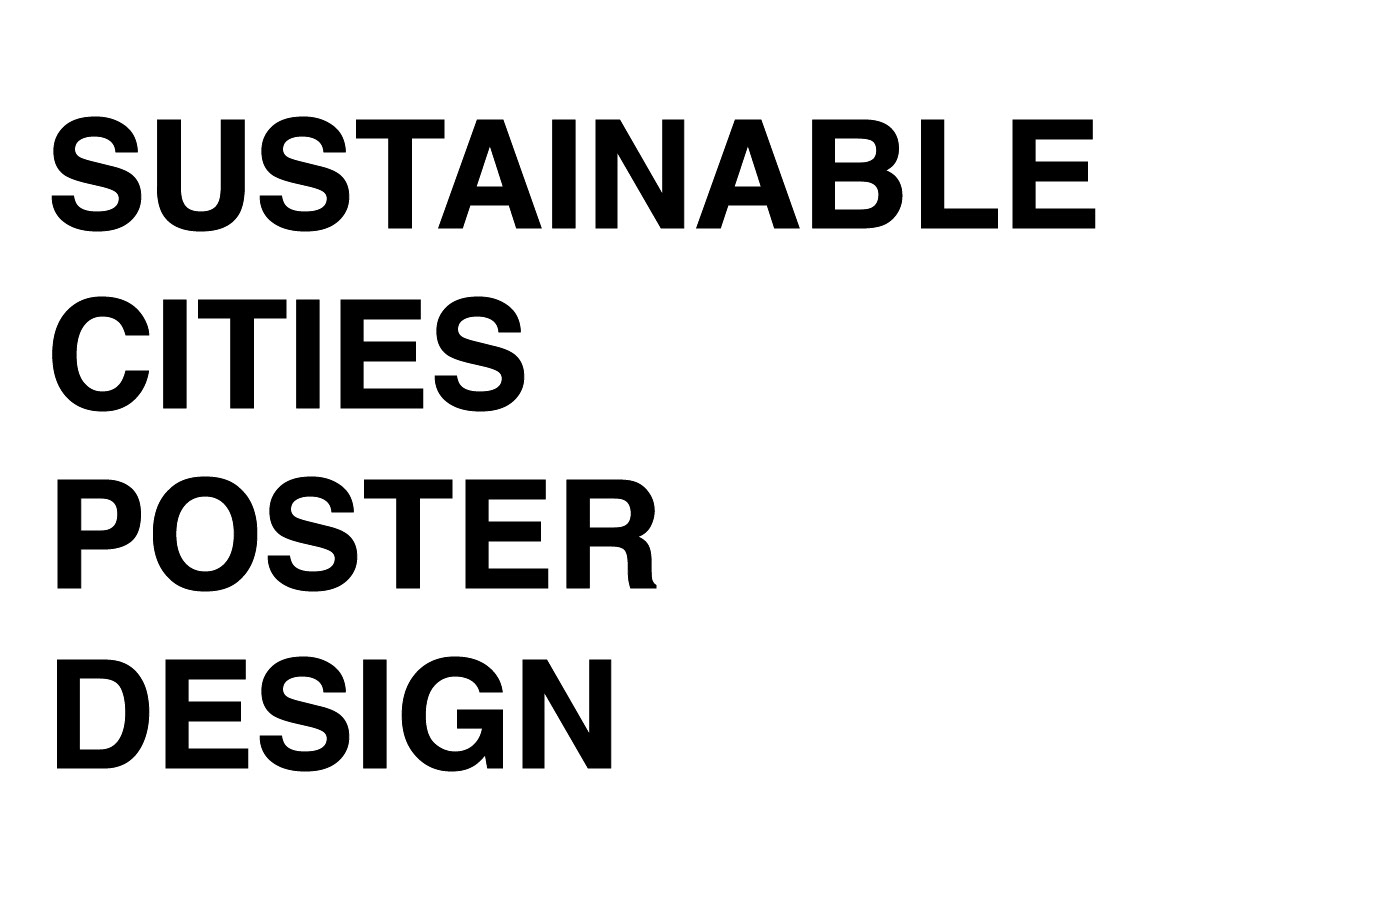 Procreate Illustrator Sustainability citizens sustainableliving posterdesign SUSTAINABLELIFESTYLE artwork sustainablefuture sustainablelife